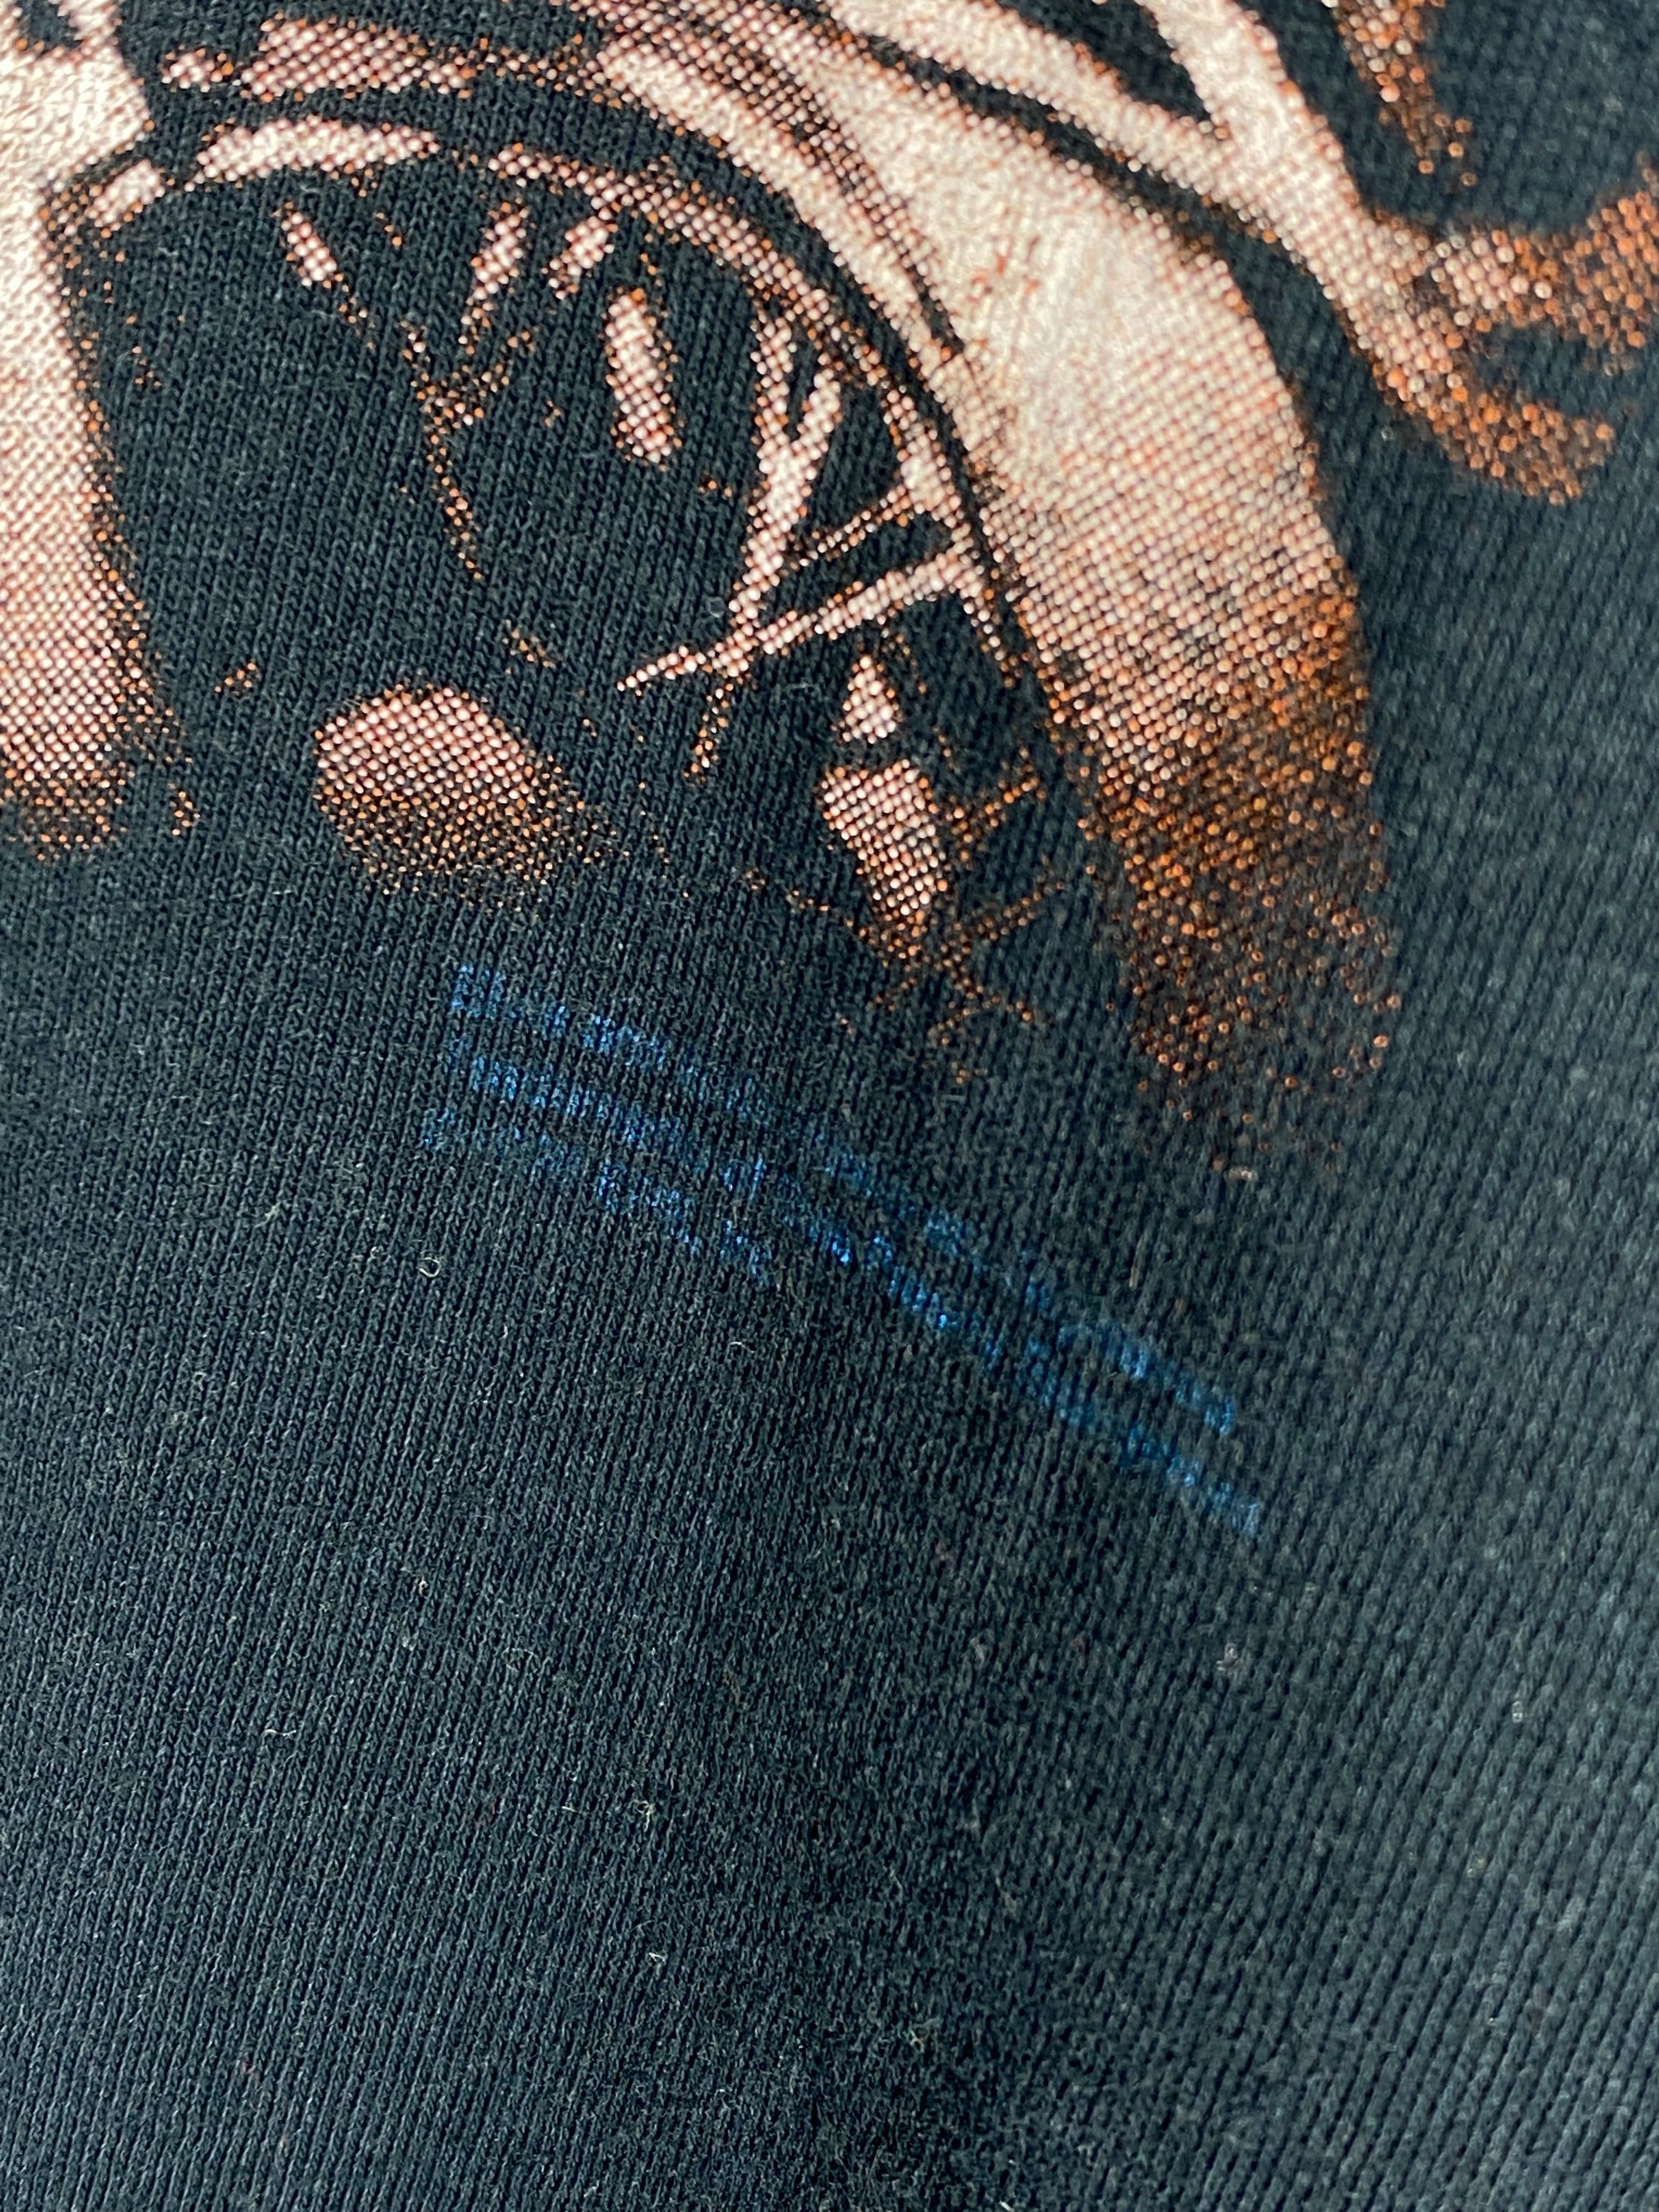 T-shirt vintage elvis presley 1996